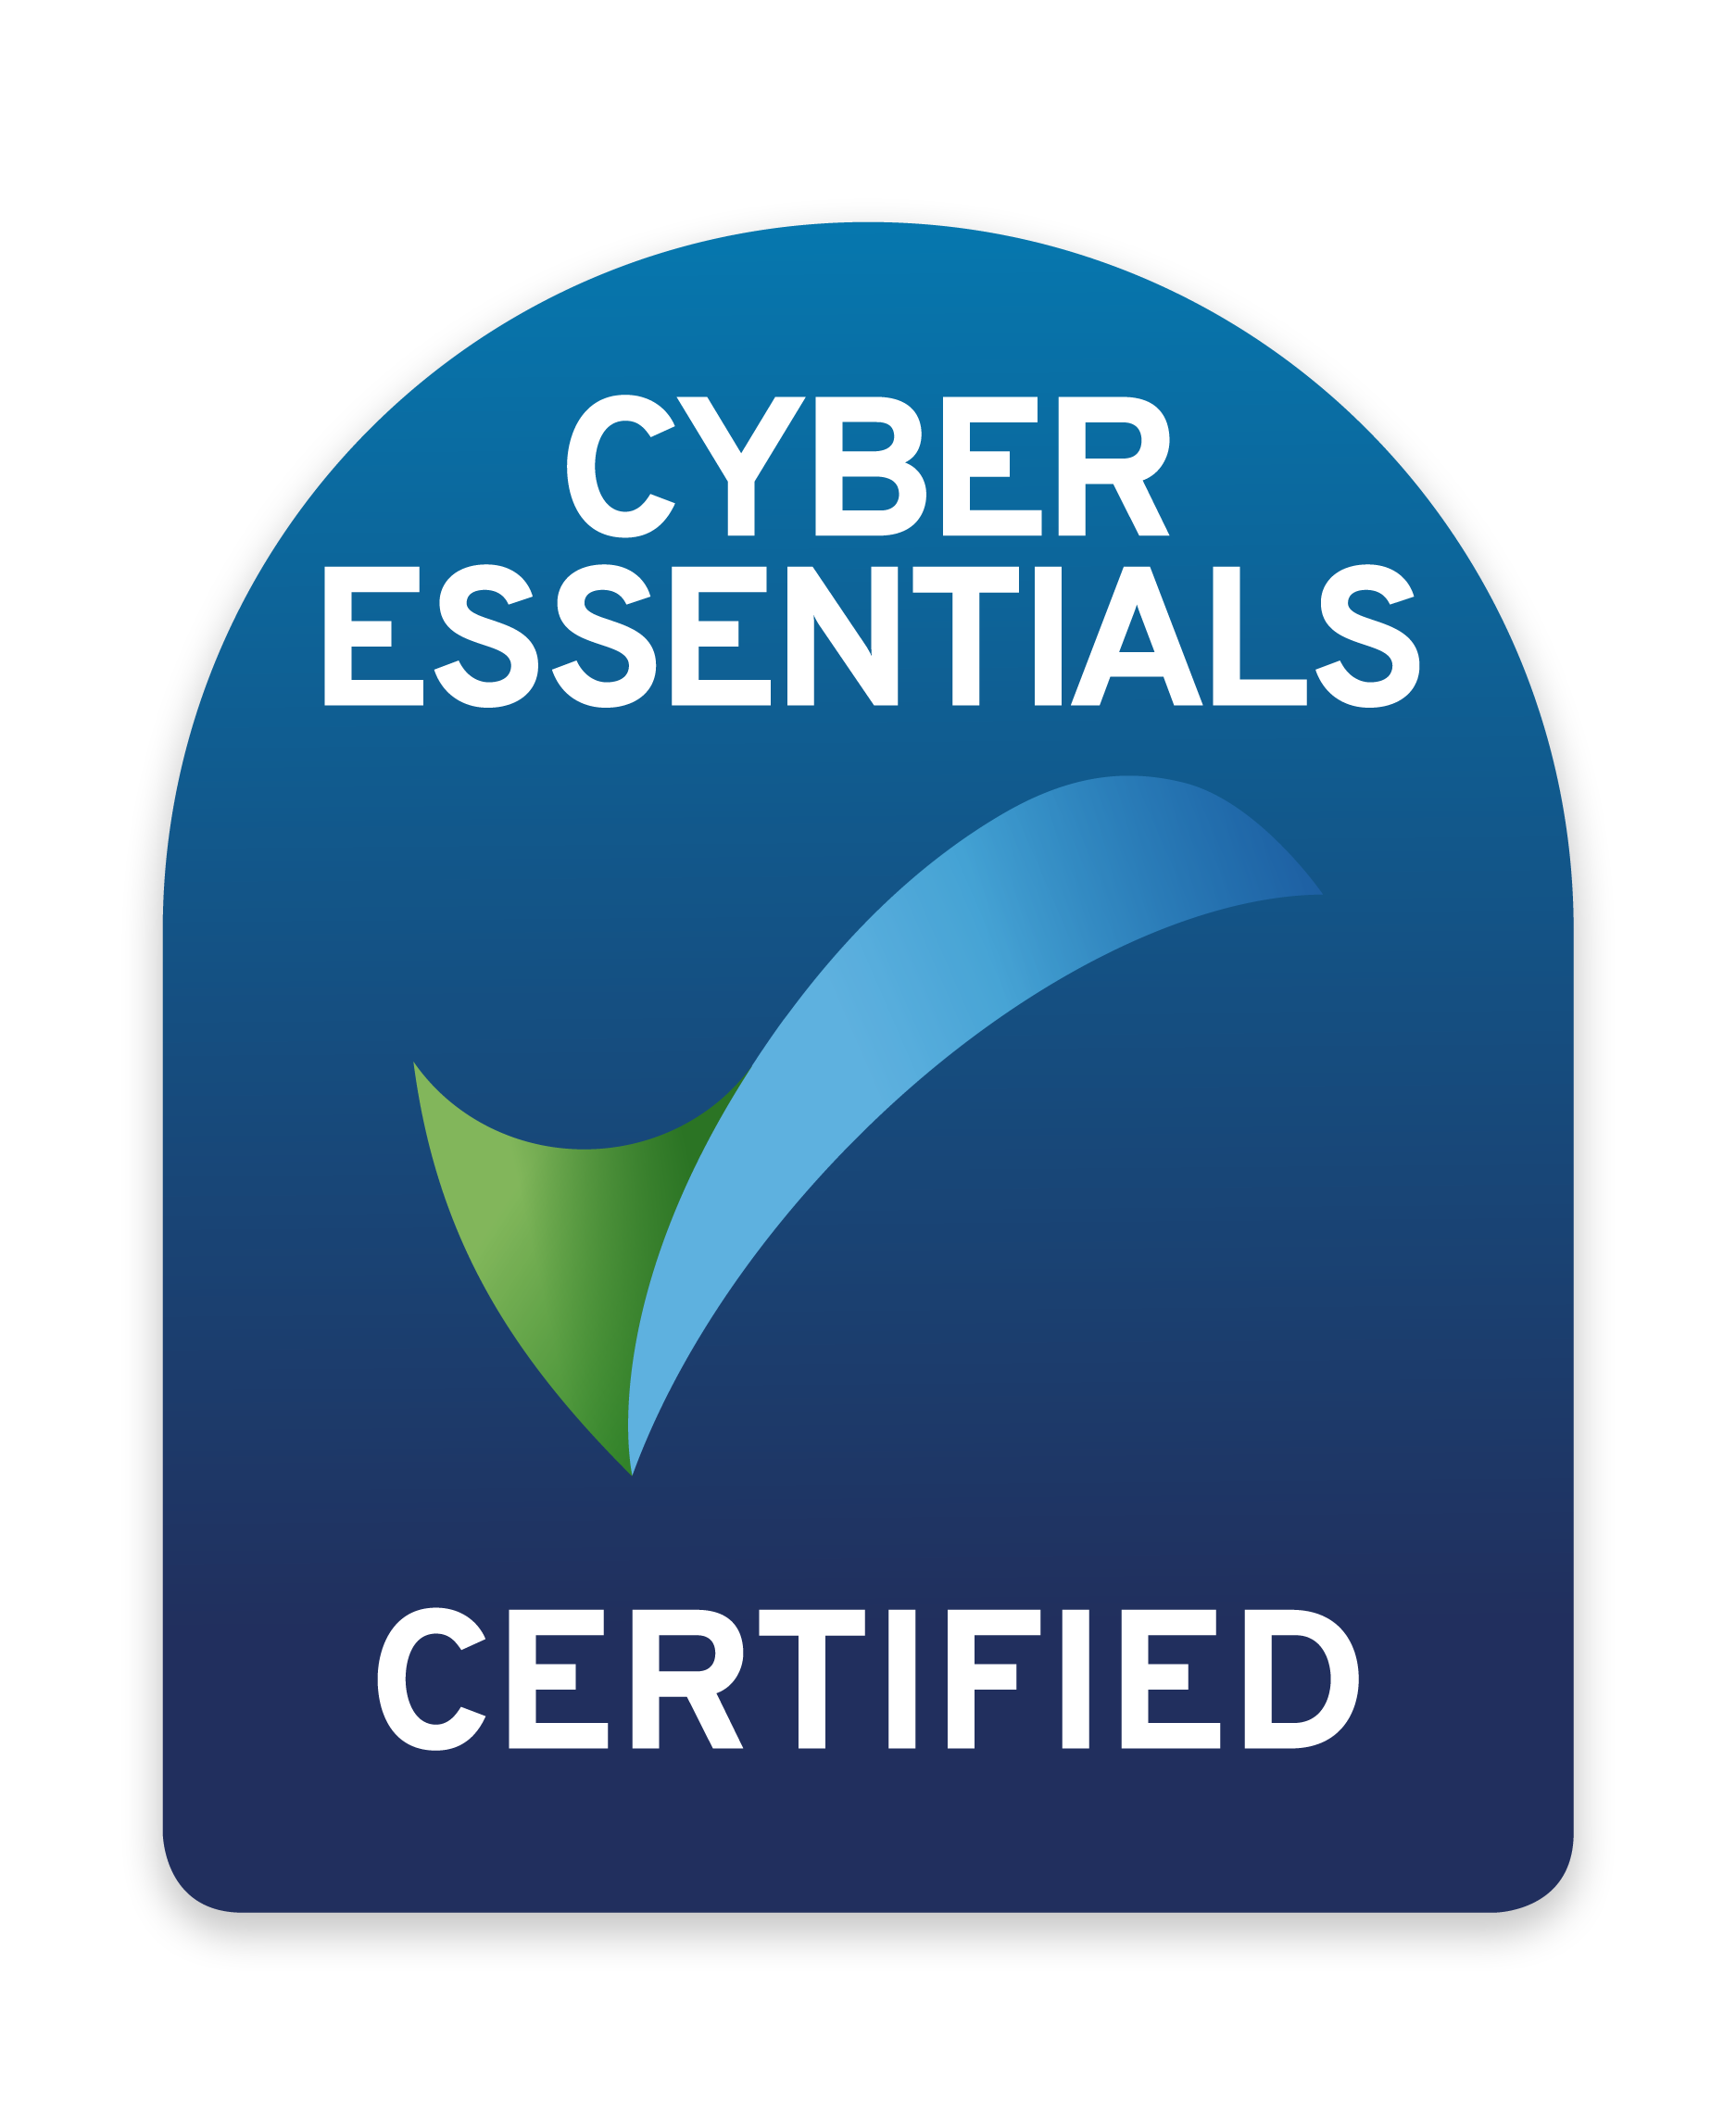 IMSM ZA Cyber Essentials Certification